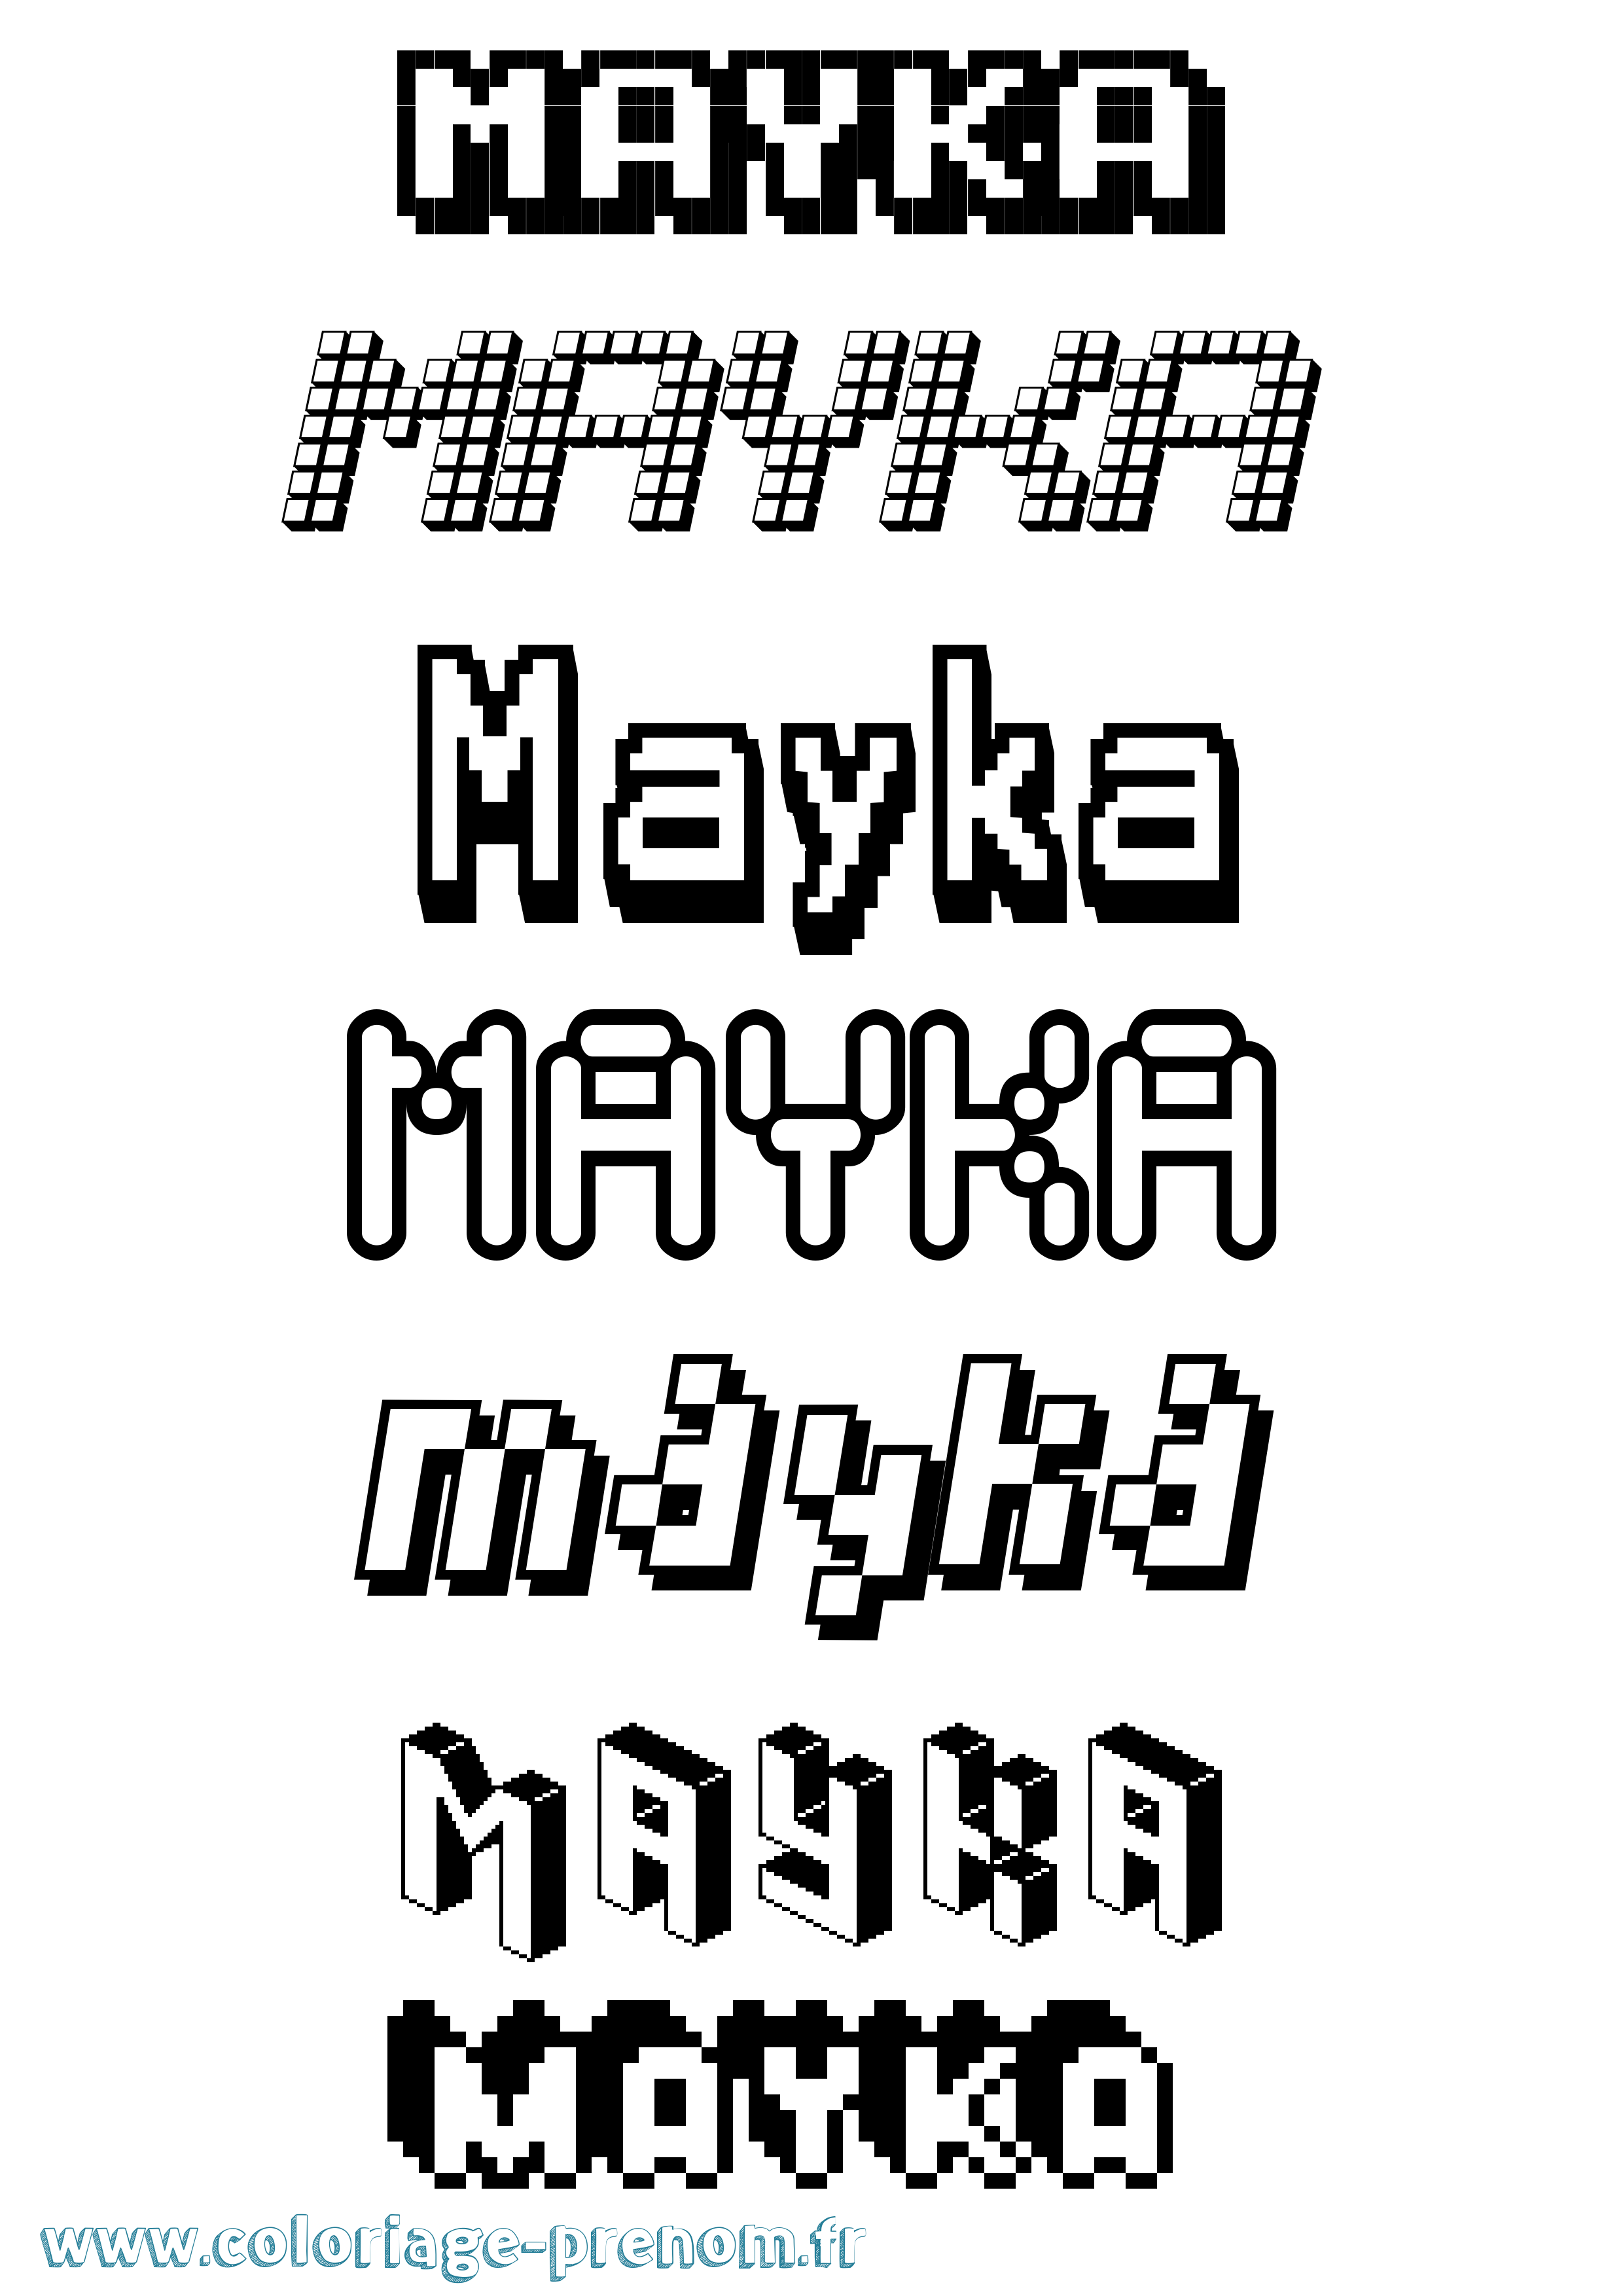 Coloriage prénom Mayka Pixel